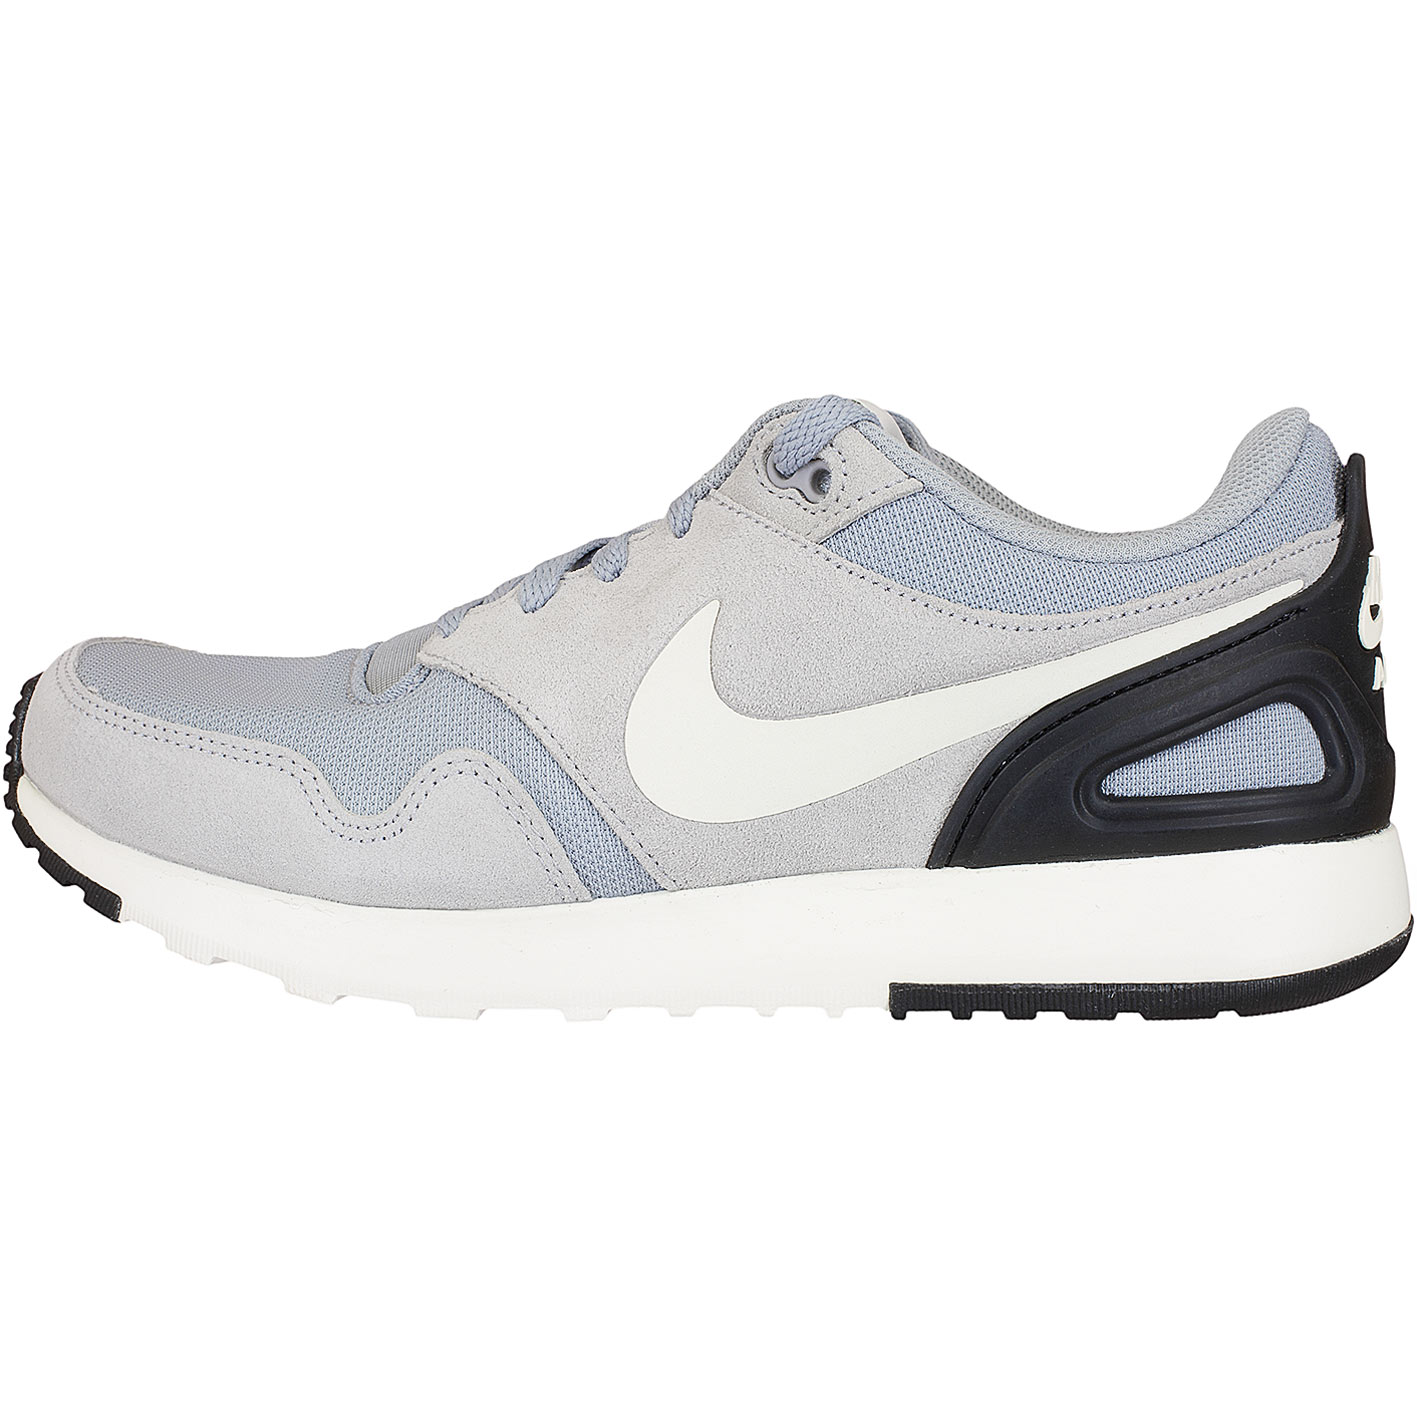 ☆ Nike Sneaker Air Vibenna grau/weiß - hier bestellen!